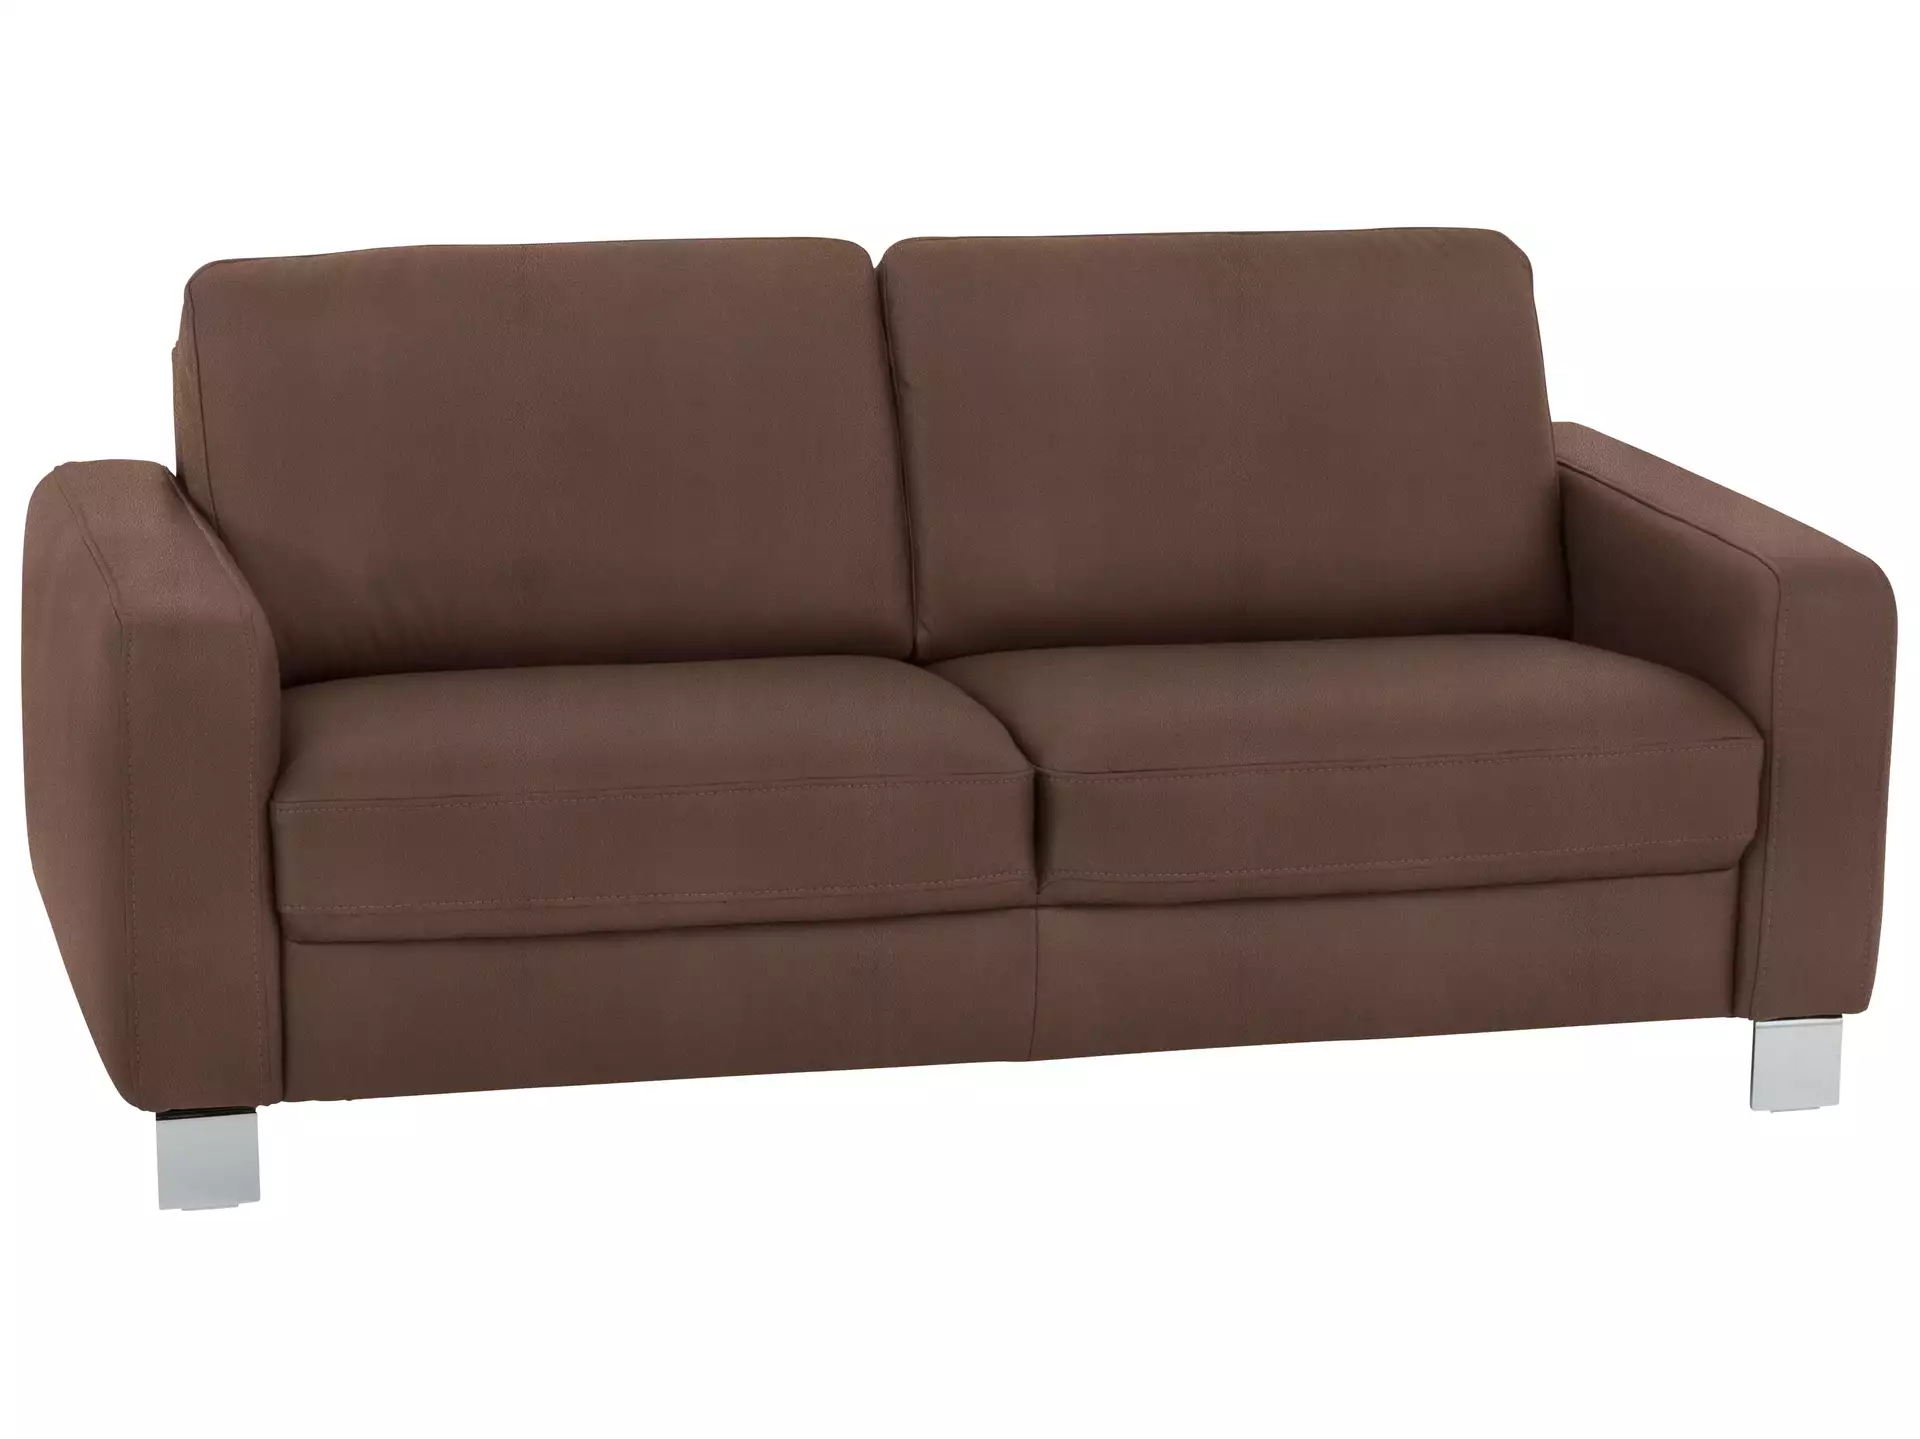 Sofa Shetland Basic B: 188 cm Polipol / Farbe: Mocca / Material: Leder Basic